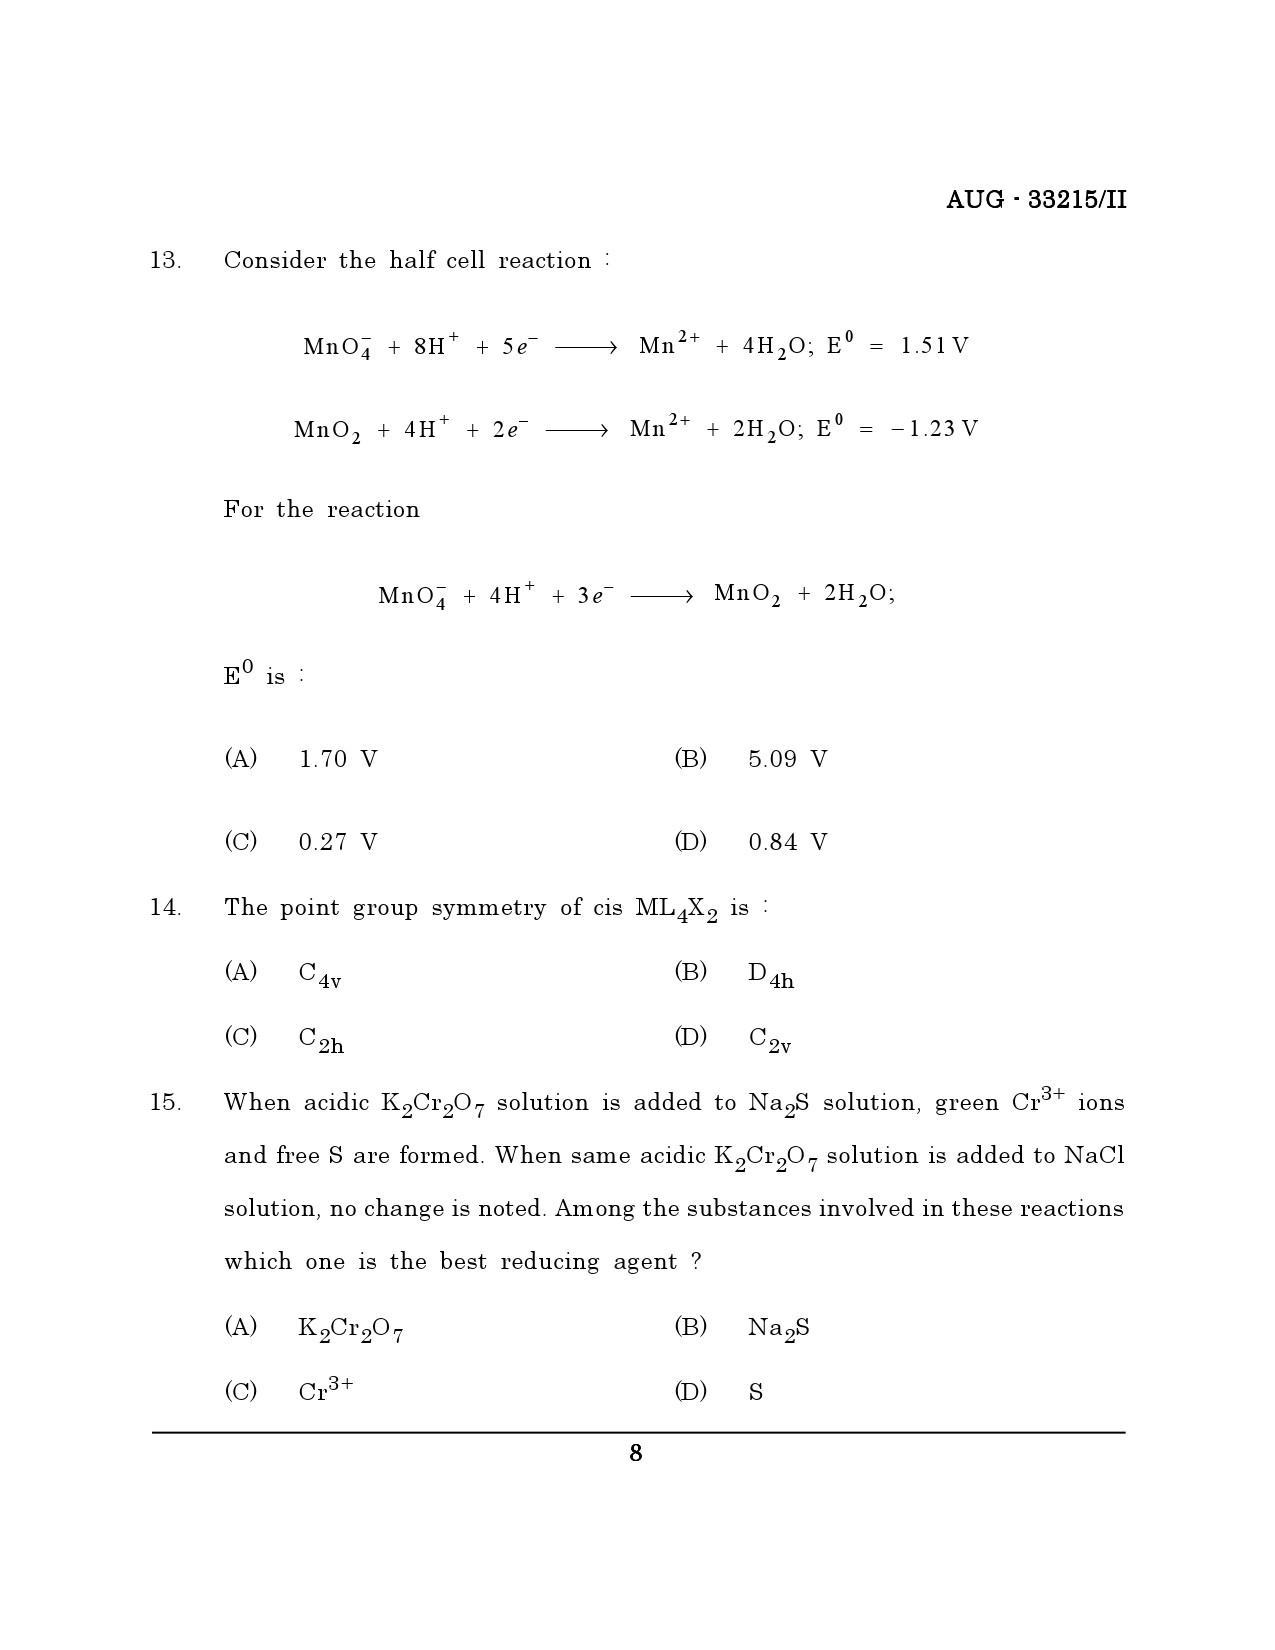 Maharashtra SET Chemical Sciences Question Paper II August 2015 7